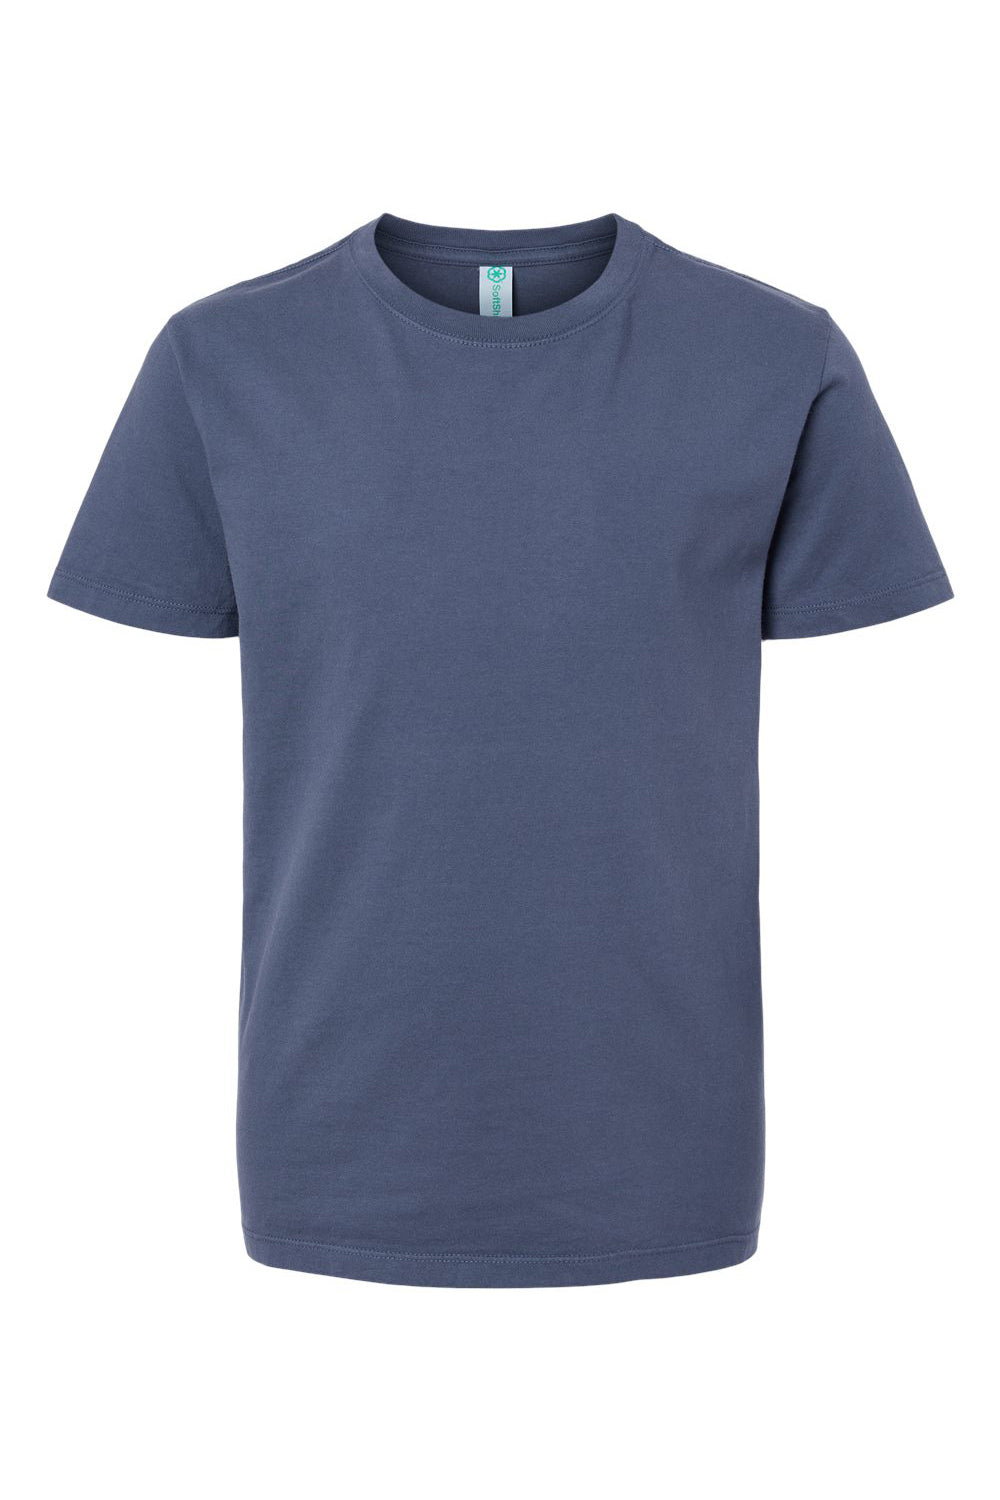 SoftShirts 402 Youth Organic Short Sleeve Crewneck T-Shirt Navy Blue Flat Front